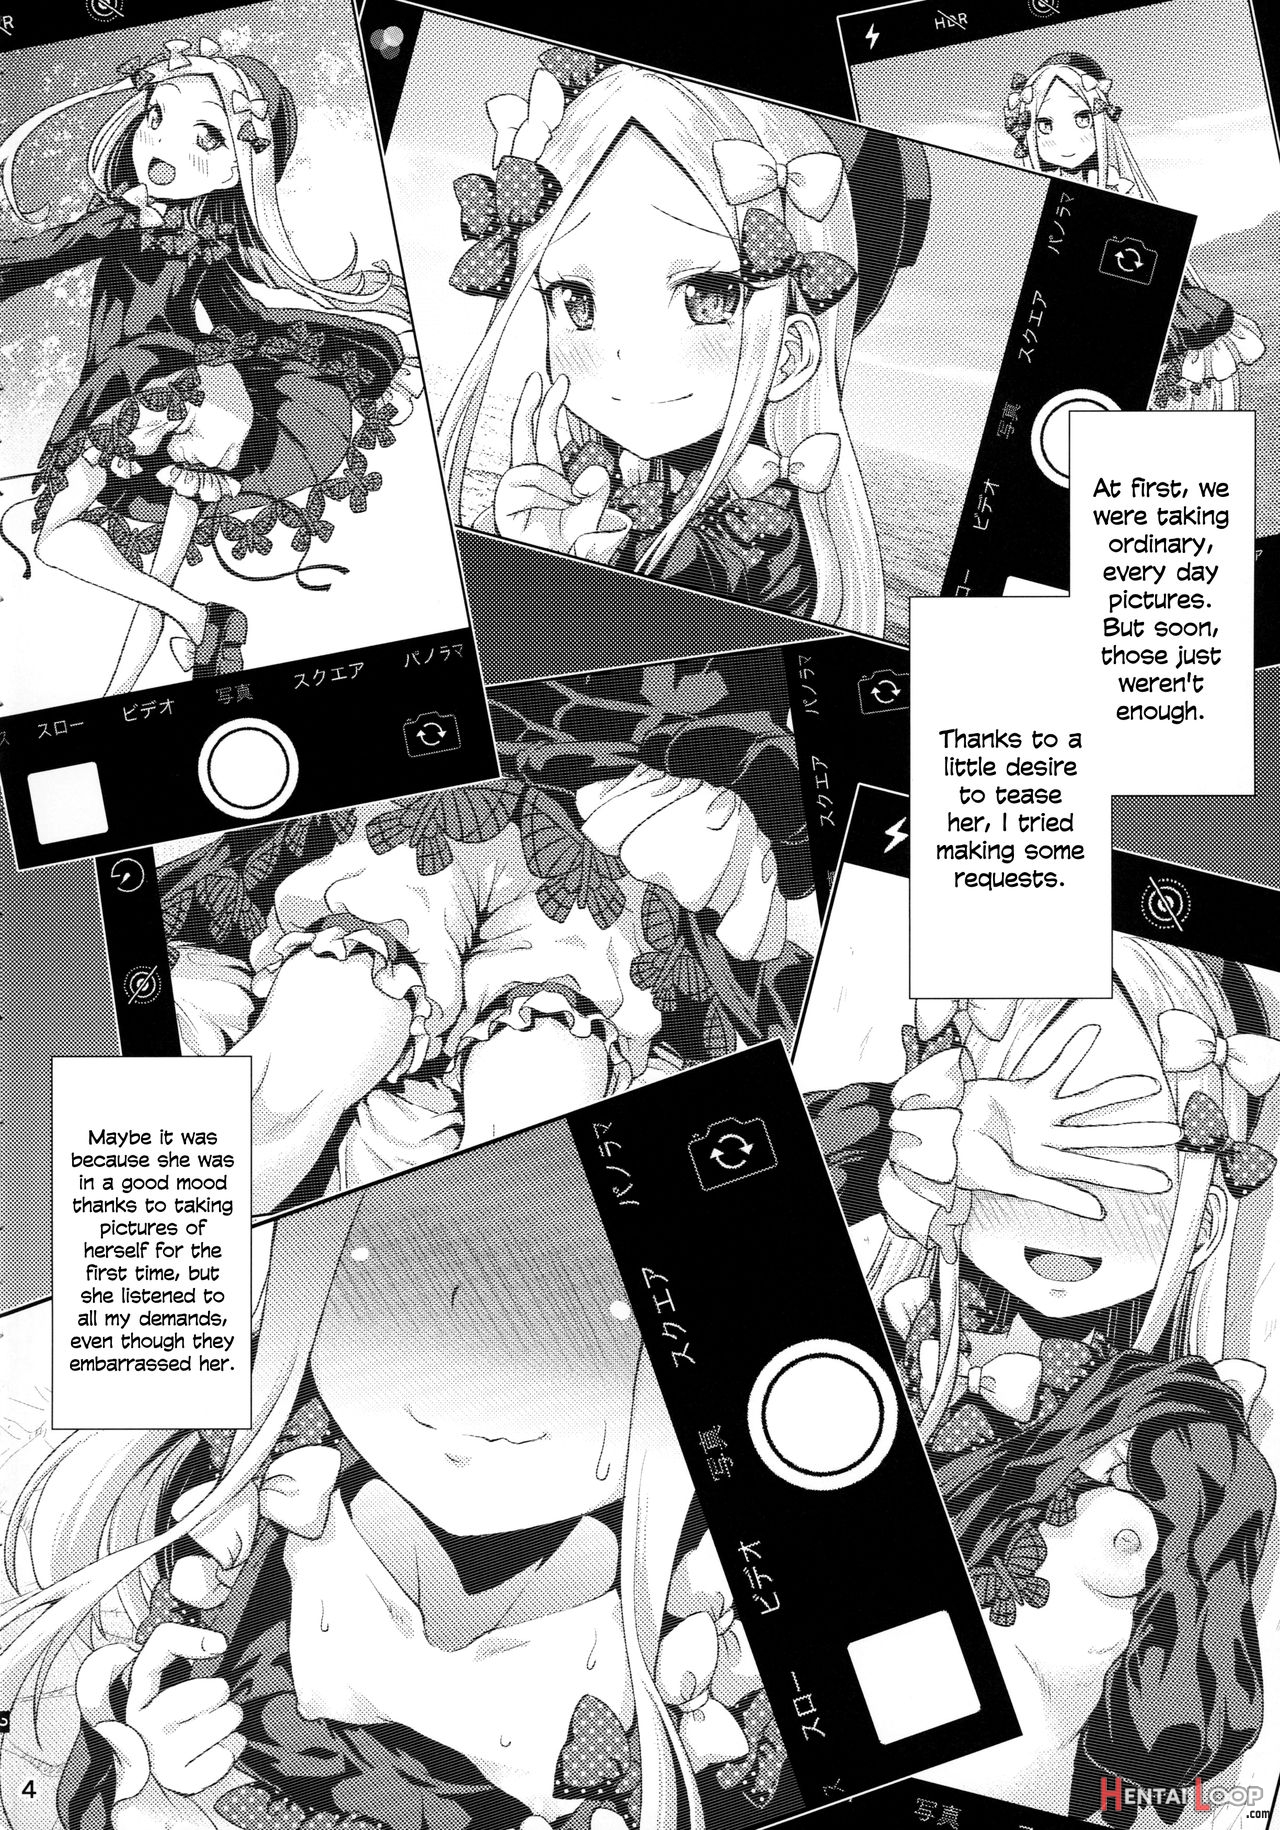 Page 3 of Abby And The Secret Homemade Sex Tape (by Yamazaki Kana) photo